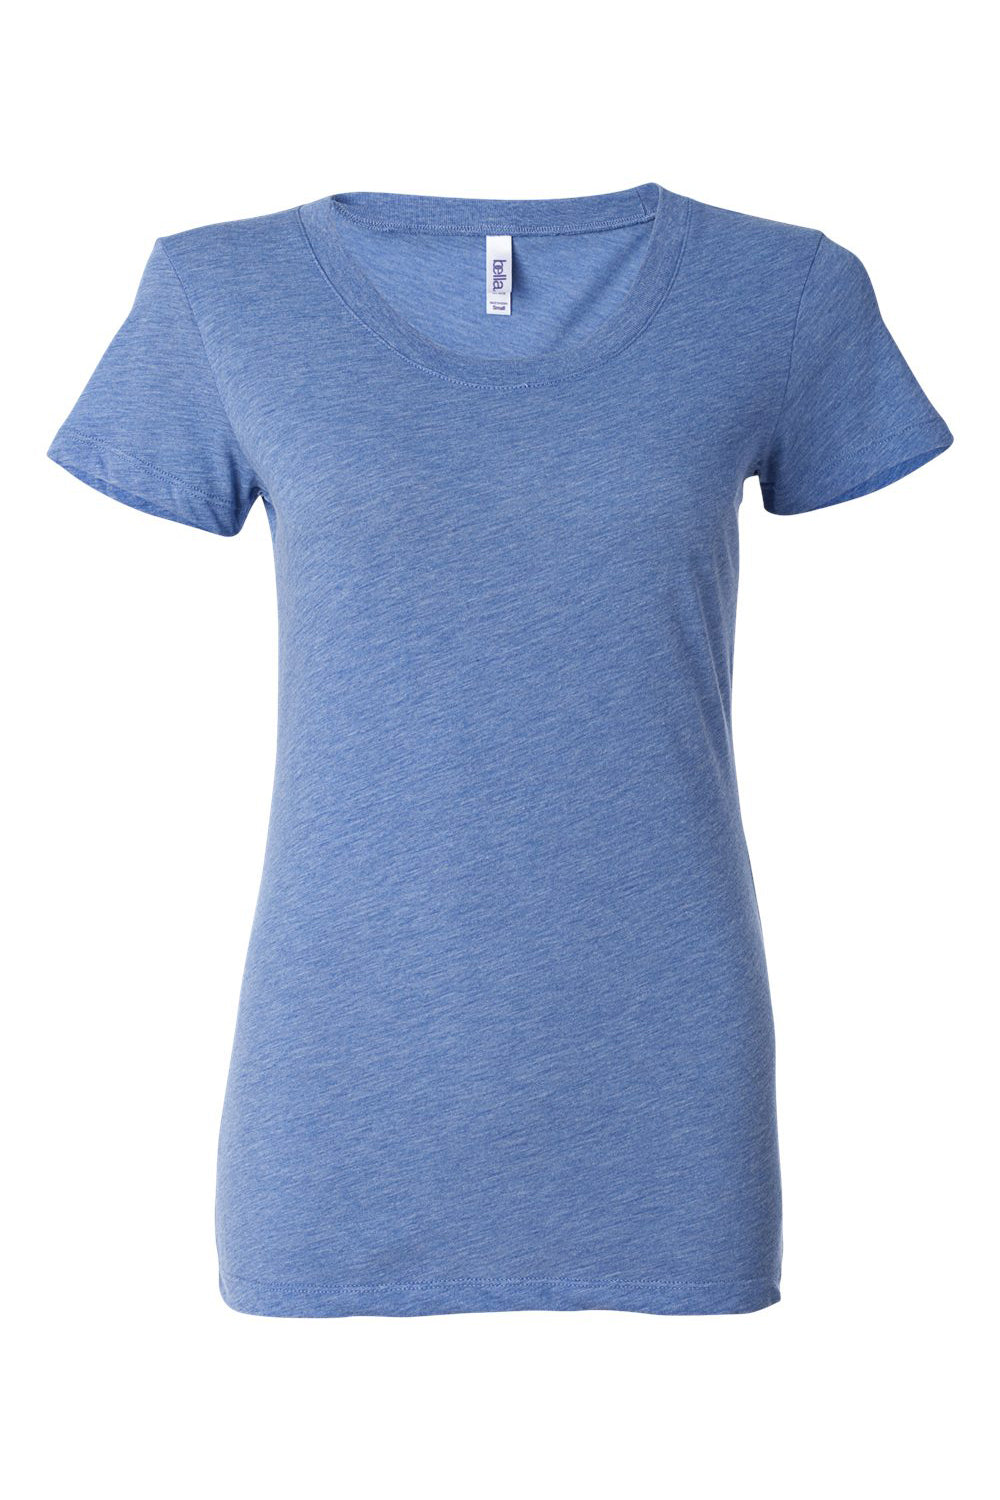 Bella + Canvas BC8413/B8413/8413 Womens Short Sleeve Crewneck T-Shirt Blue Flat Front